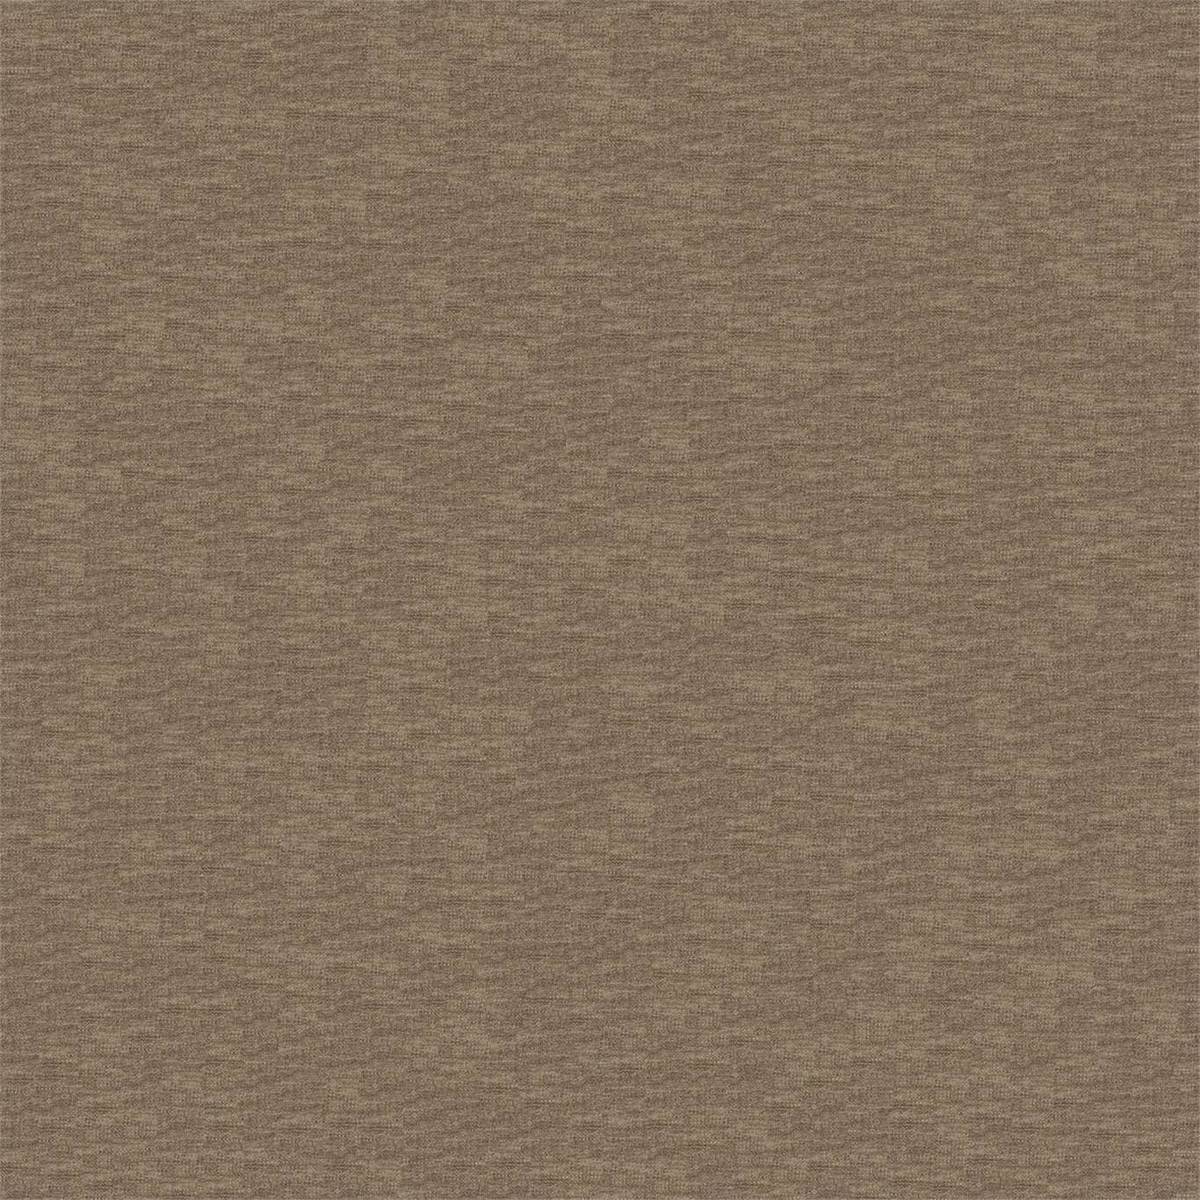 Esala Plains Truffle Fabric by Scion